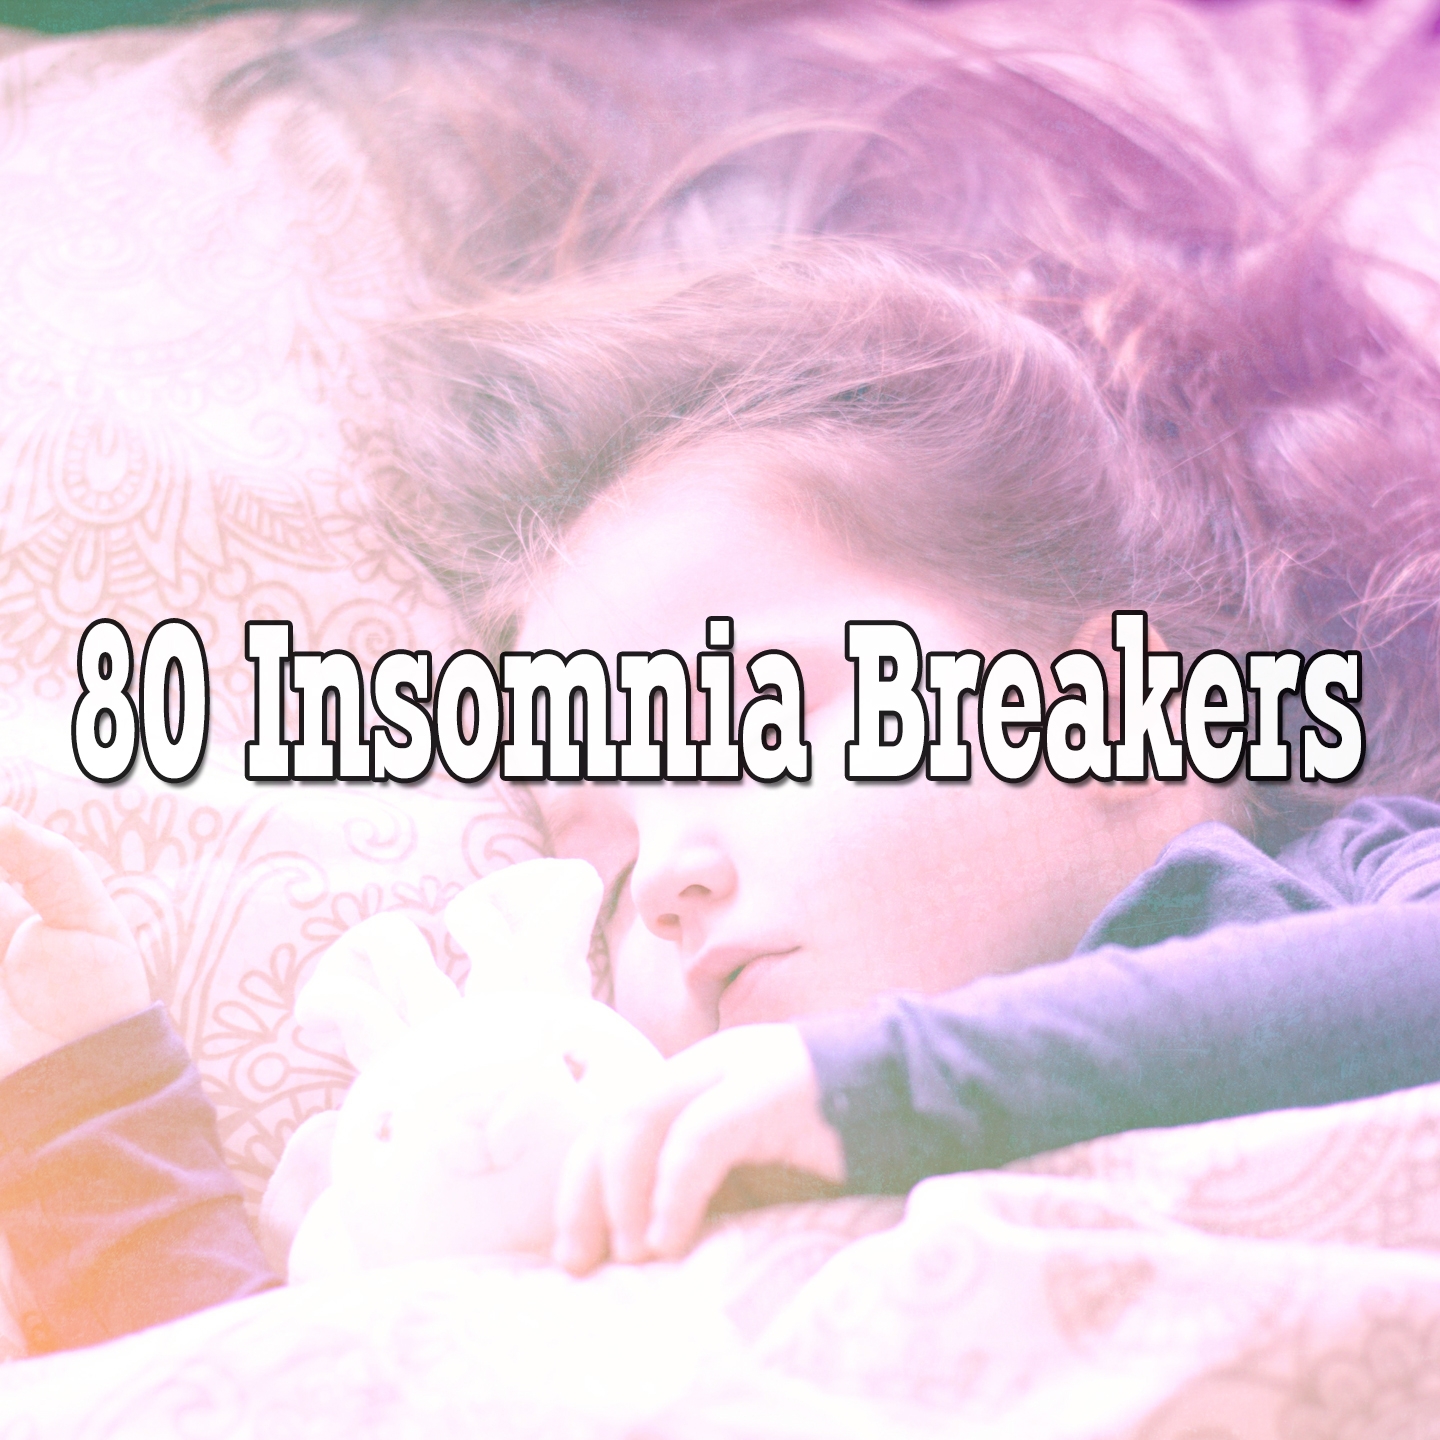 80 Insomnia Breakers